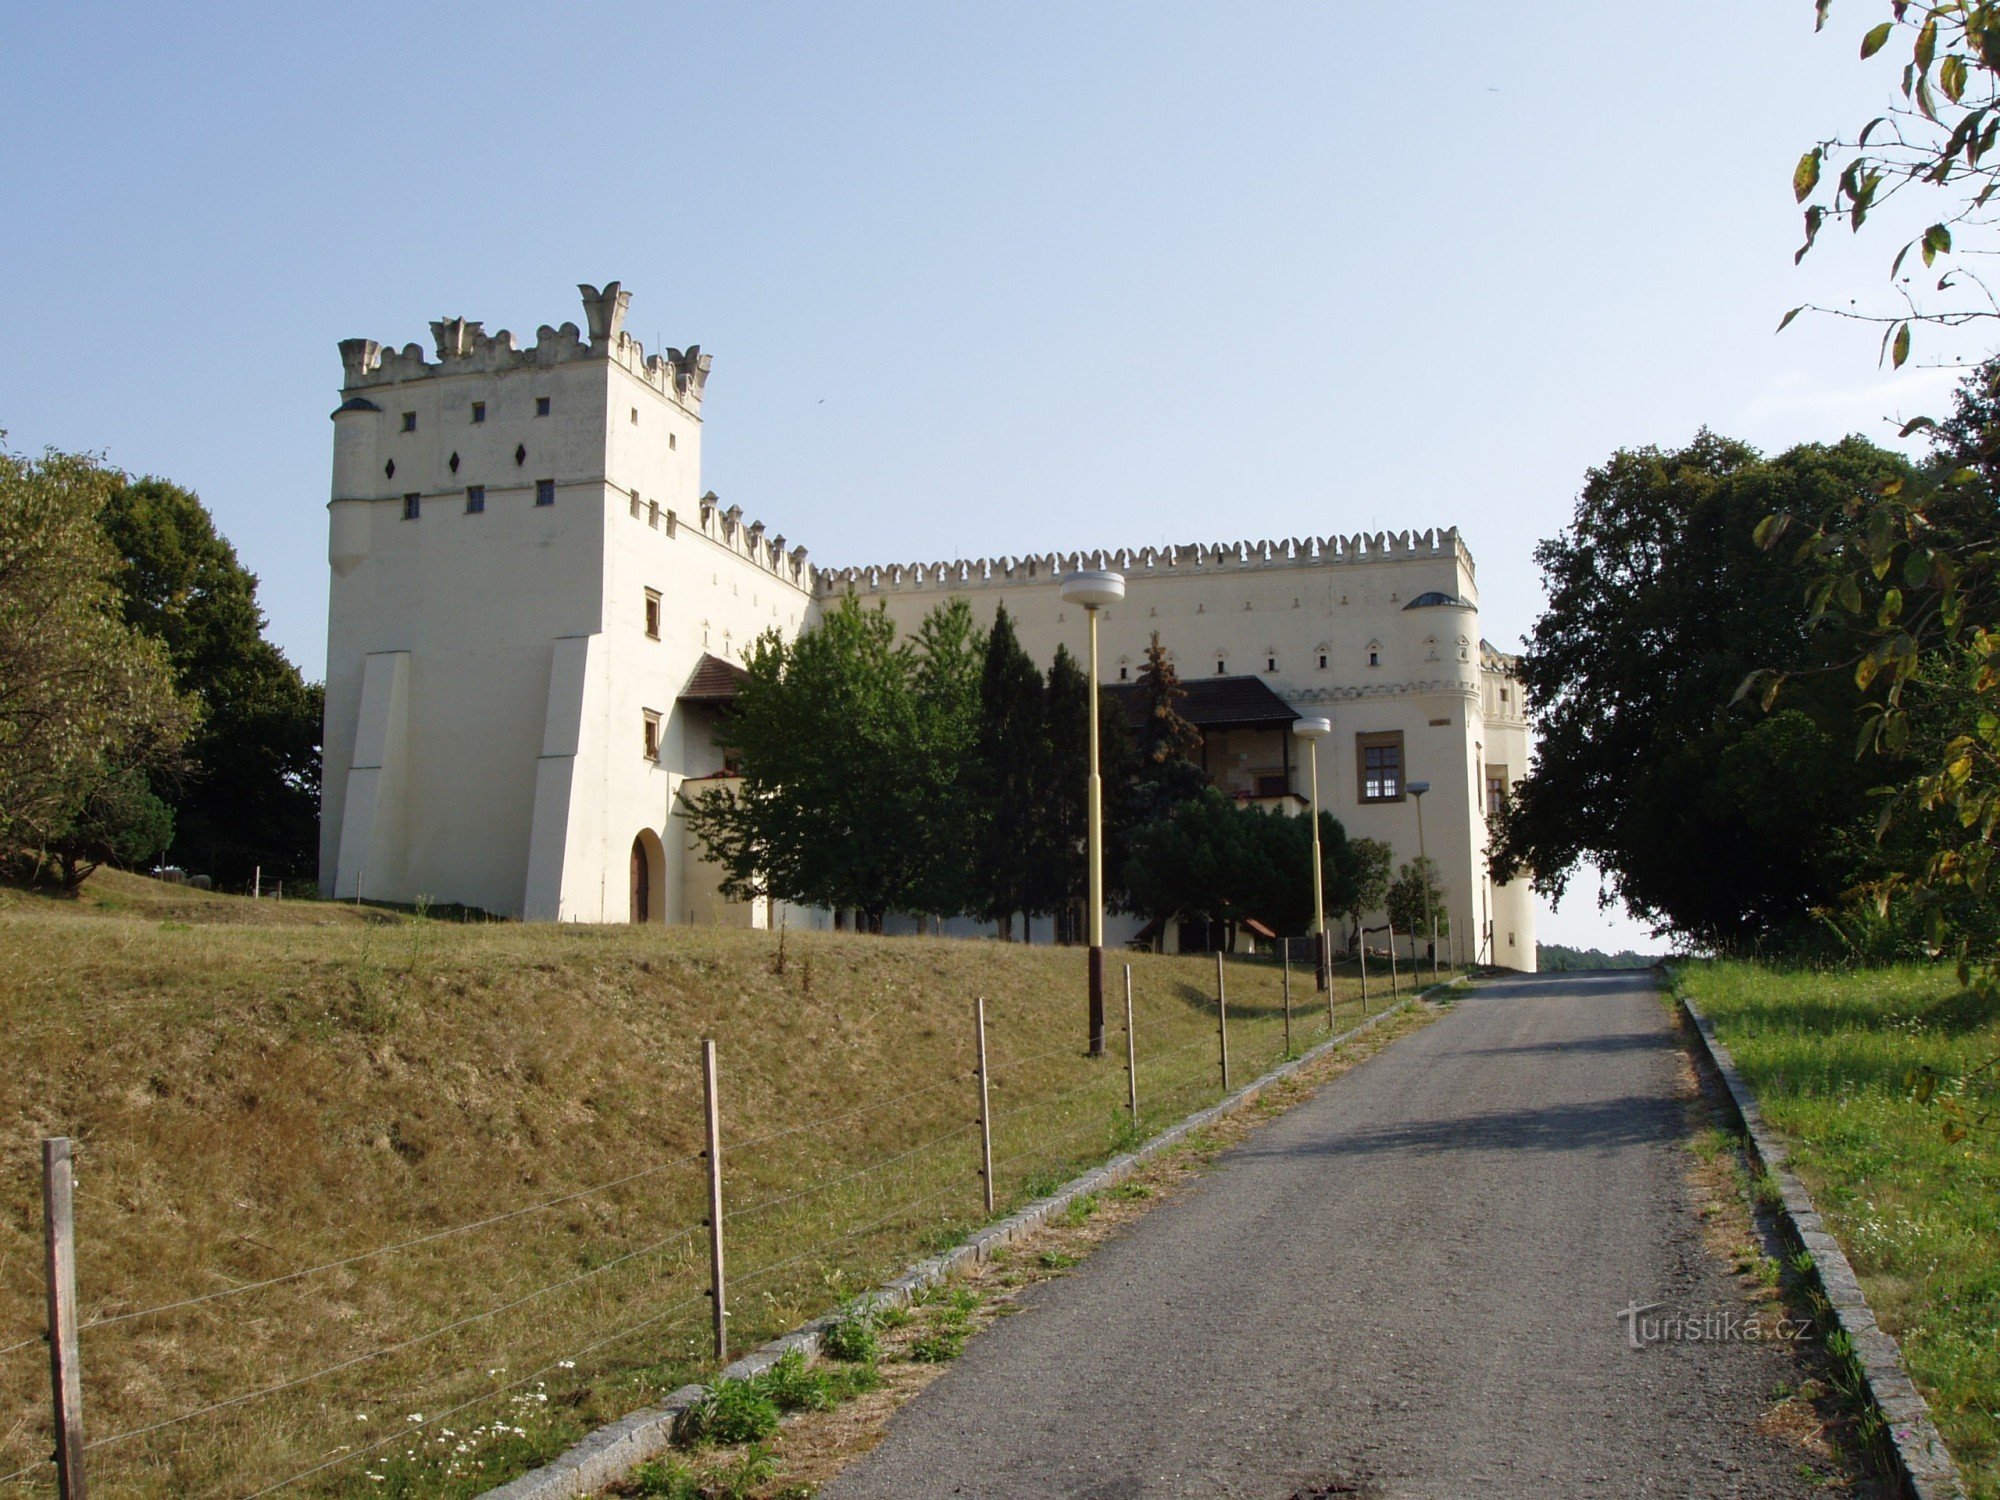 Lâu đài mới gần Nesovice